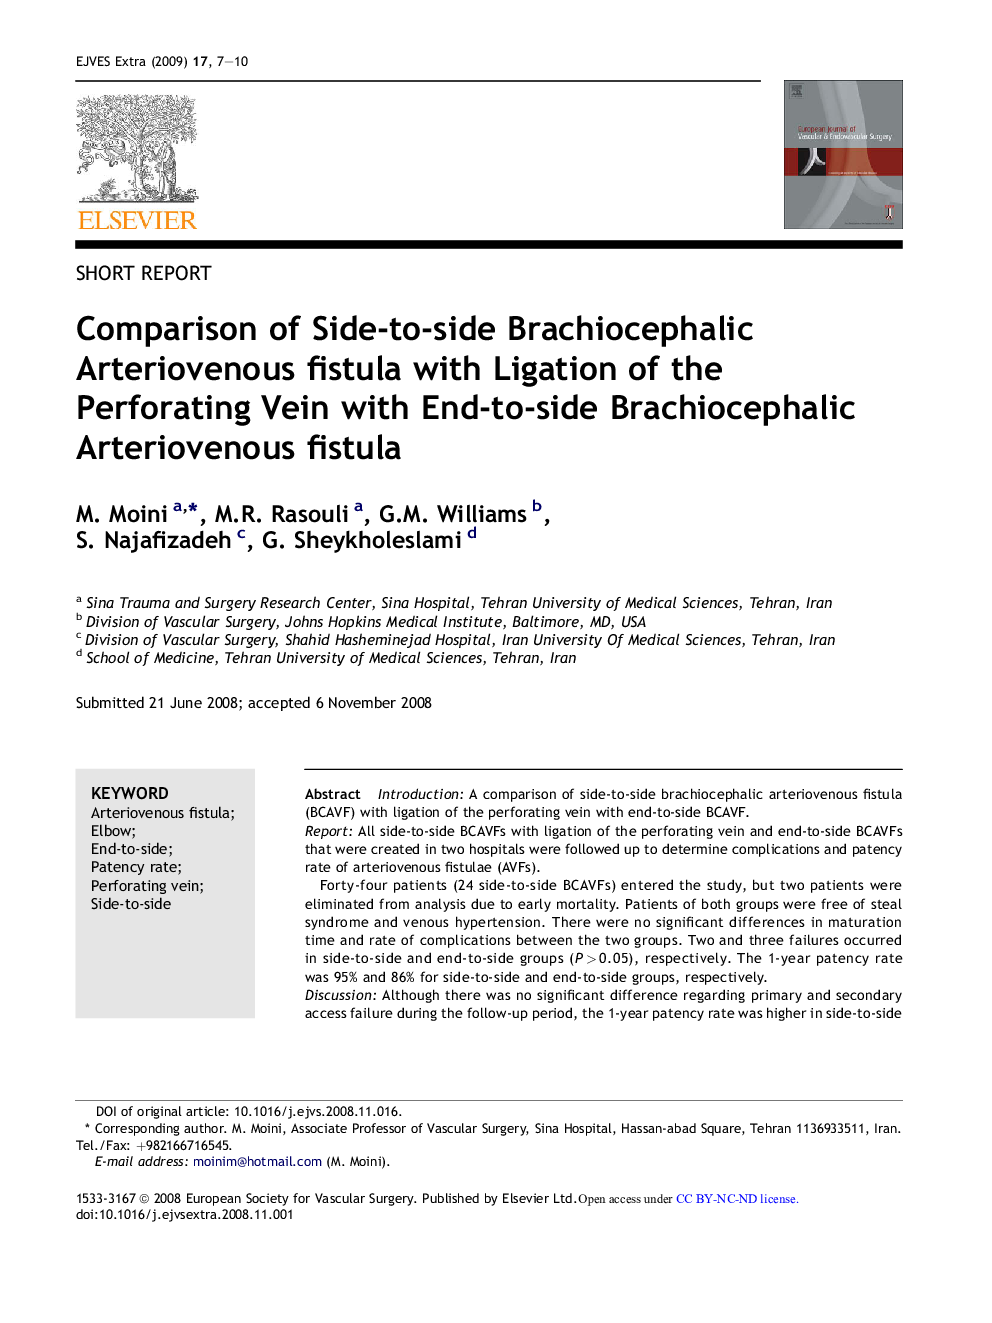 Comparison of Side-to-side Brachiocephalic Arteriovenous fistula with Ligation of the Perforating Vein with End-to-side Brachiocephalic Arteriovenous fistula